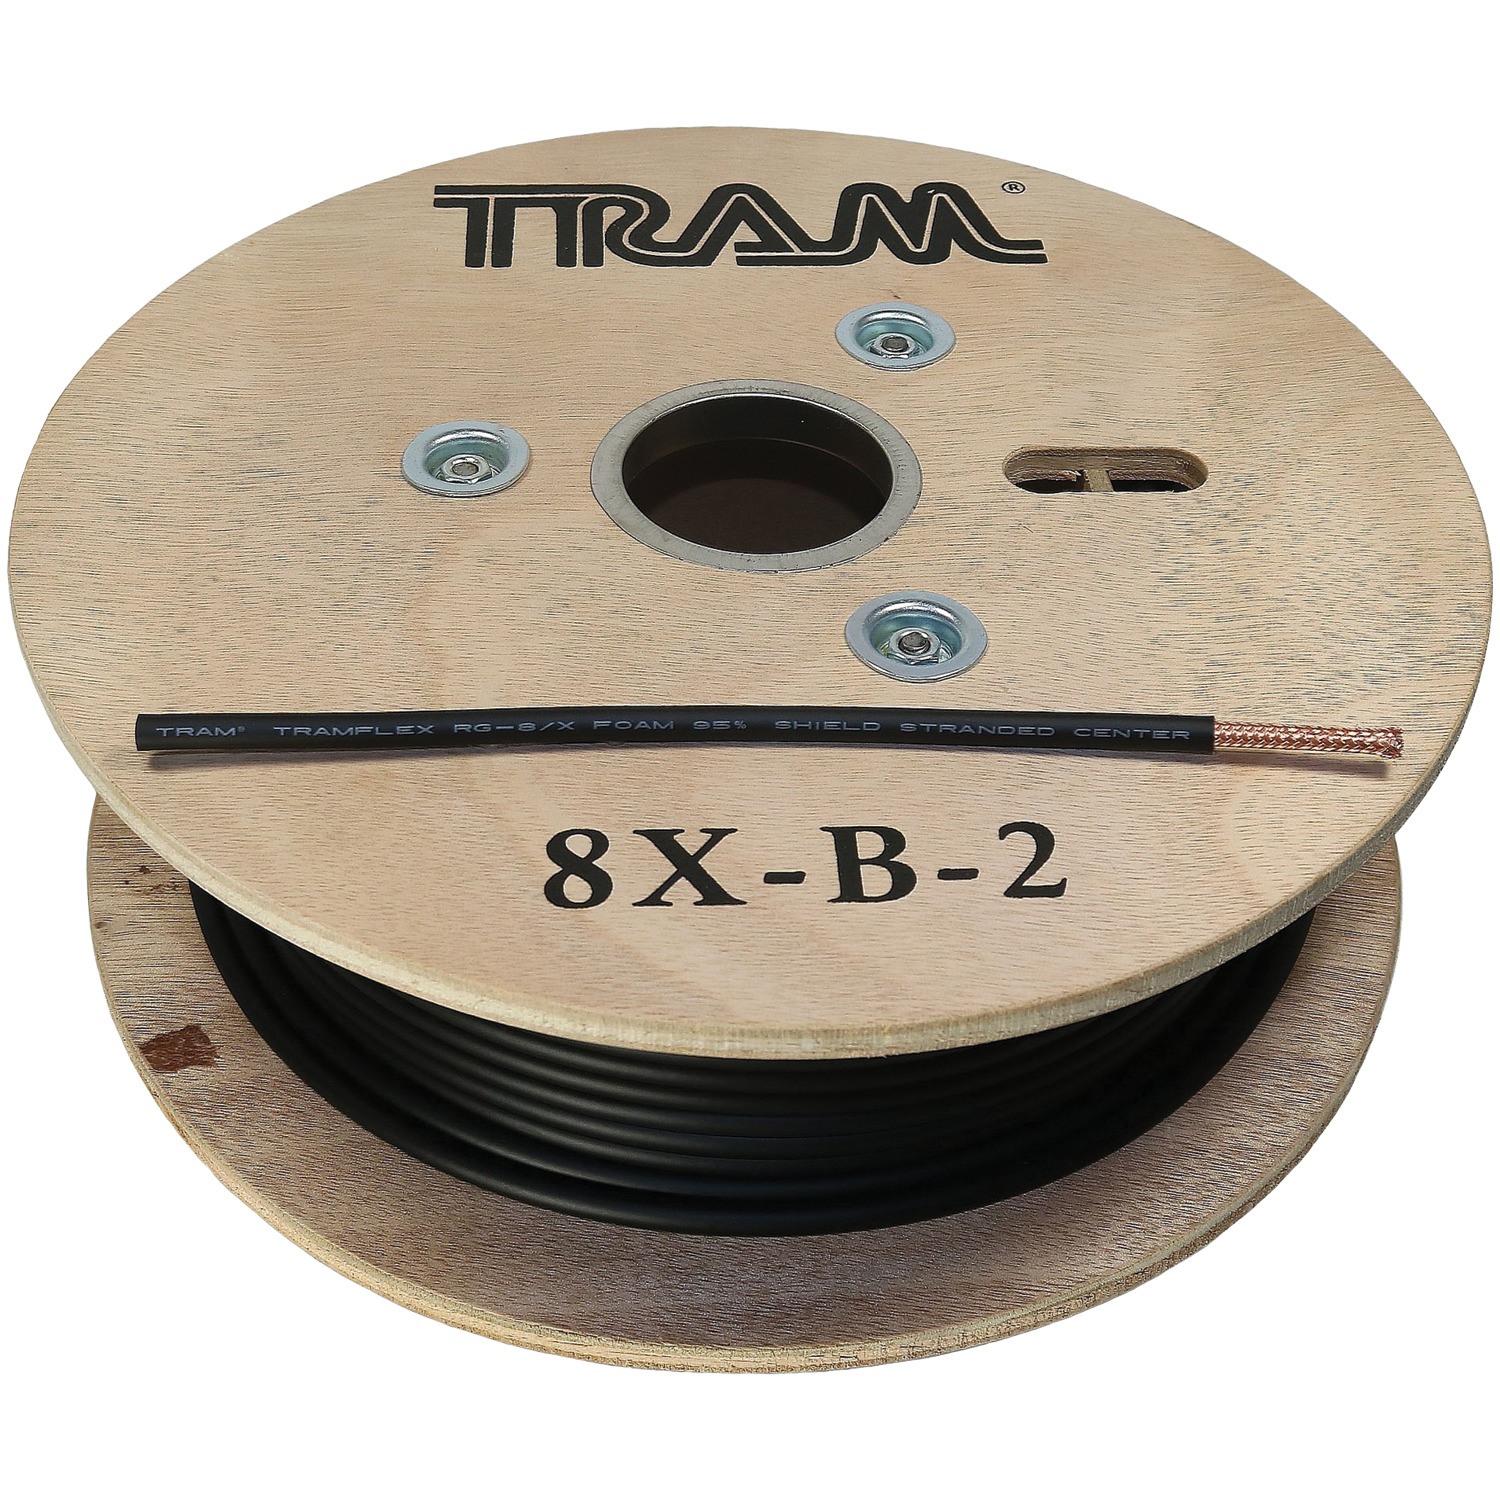 Tram Rg-8x Tramflex Precision Rf Coax Cable (200 Feet) - image 1 of 3